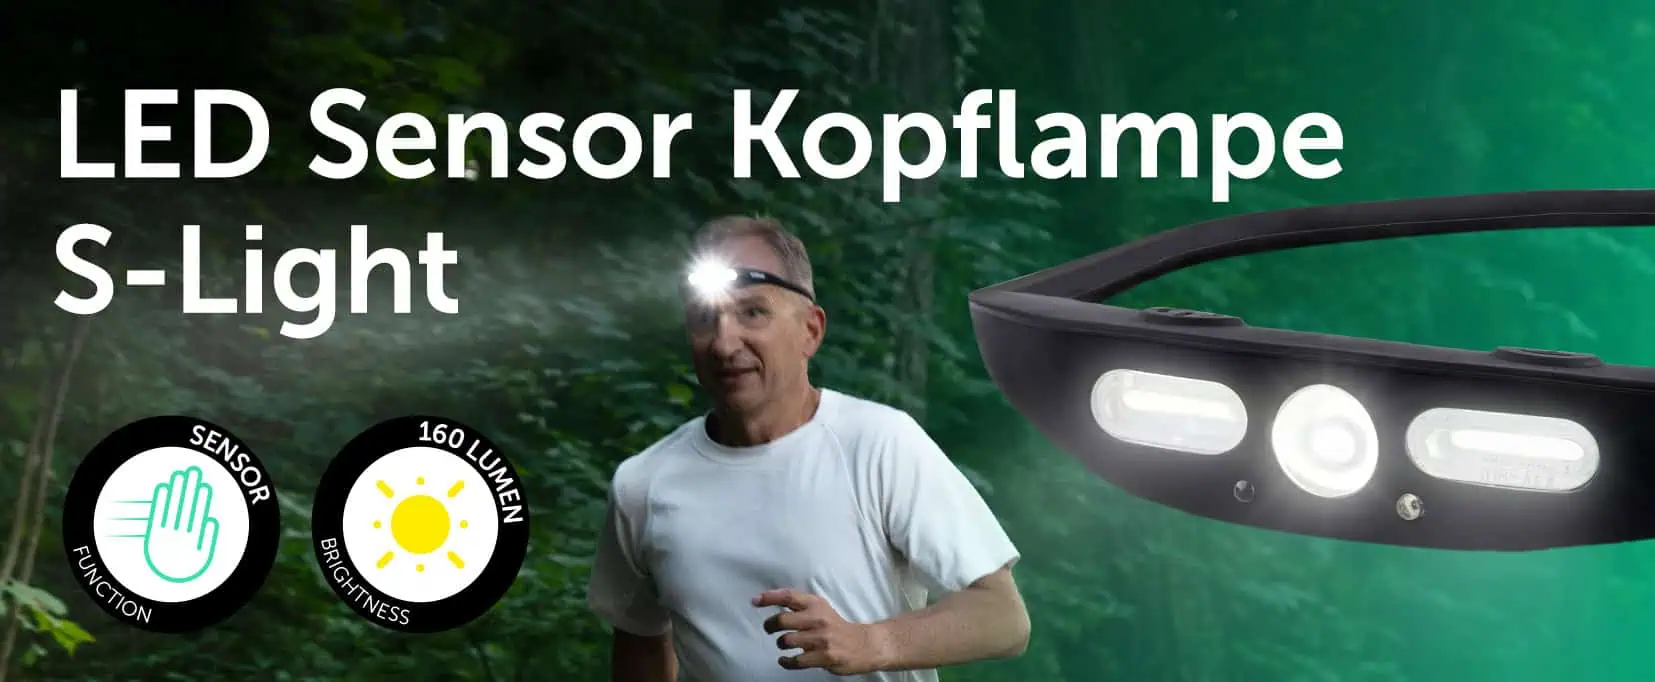 LED sensor pannlampa S-Light